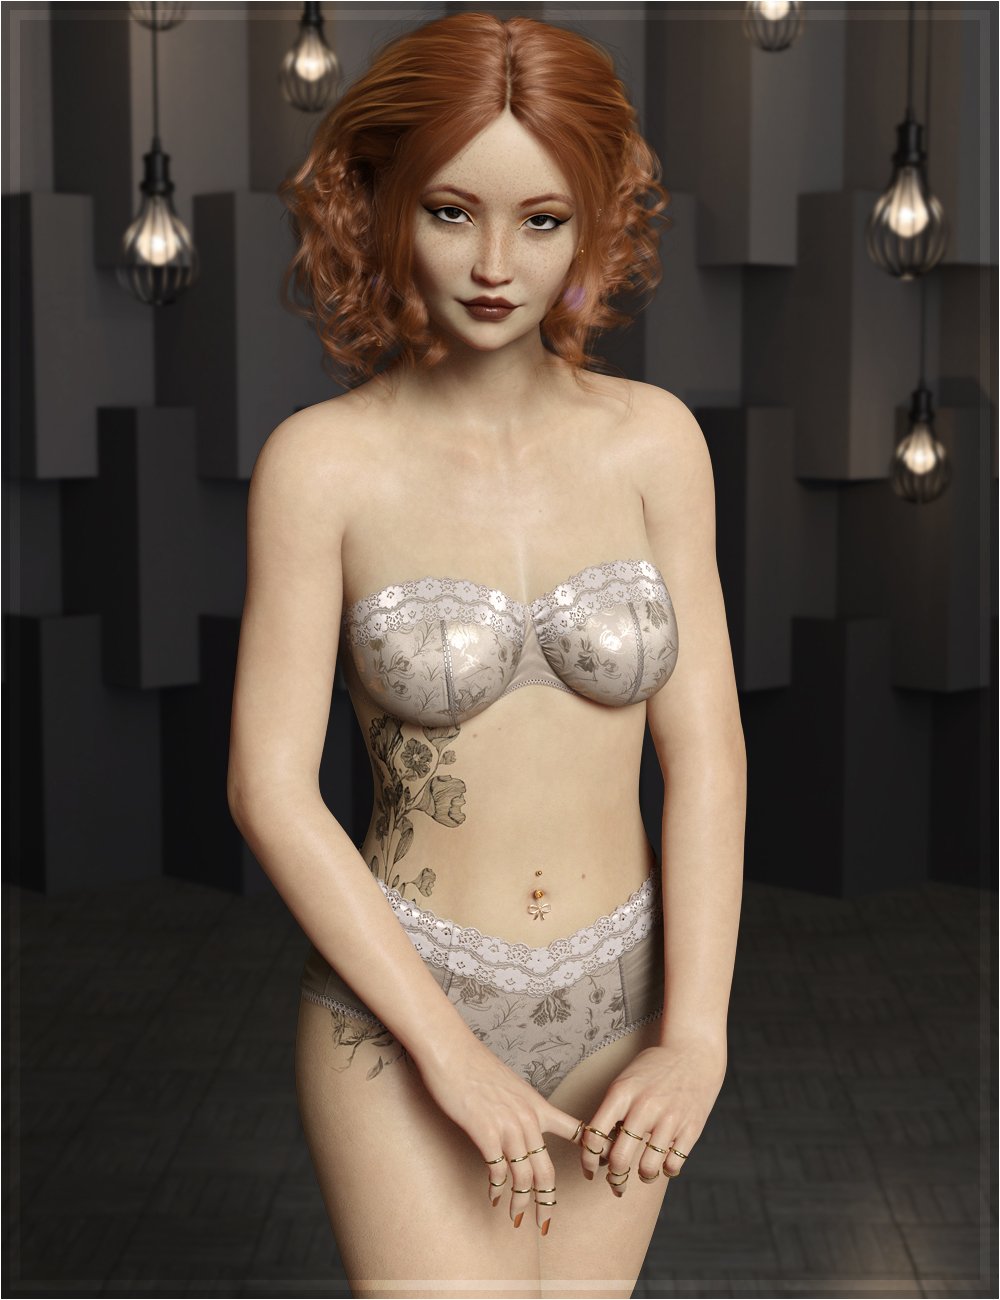 Norah for Genesis 8 Female by: OziChickTwiztedMetal, 3D Models by Daz 3D